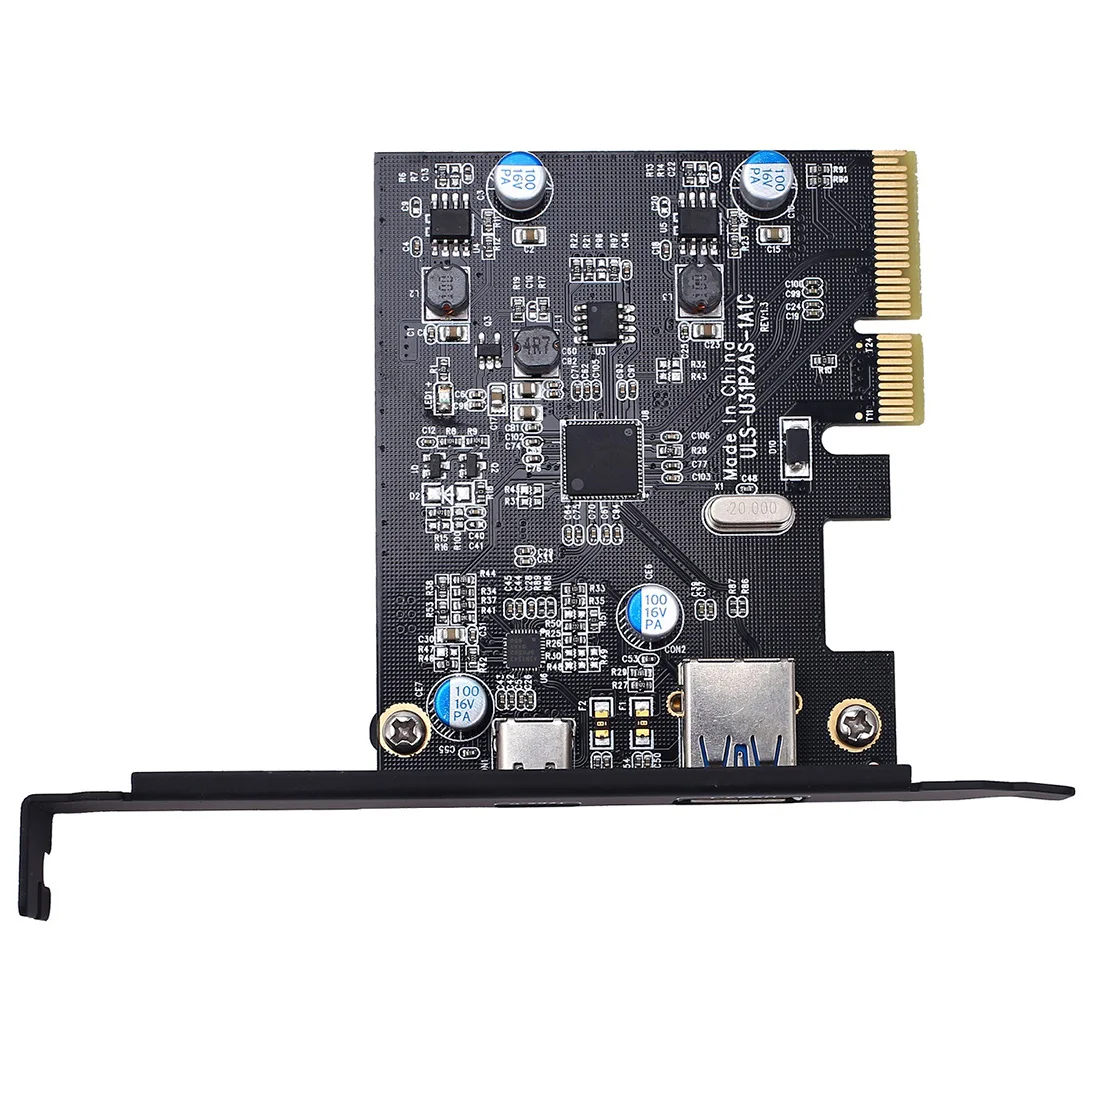 Add on Card Внешний USB 3,1 10 Гбит/с PCI Express Riser Card 1x Тип C и 1x тип A USB 3,0 порт расширения адаптер для шахтера ПК